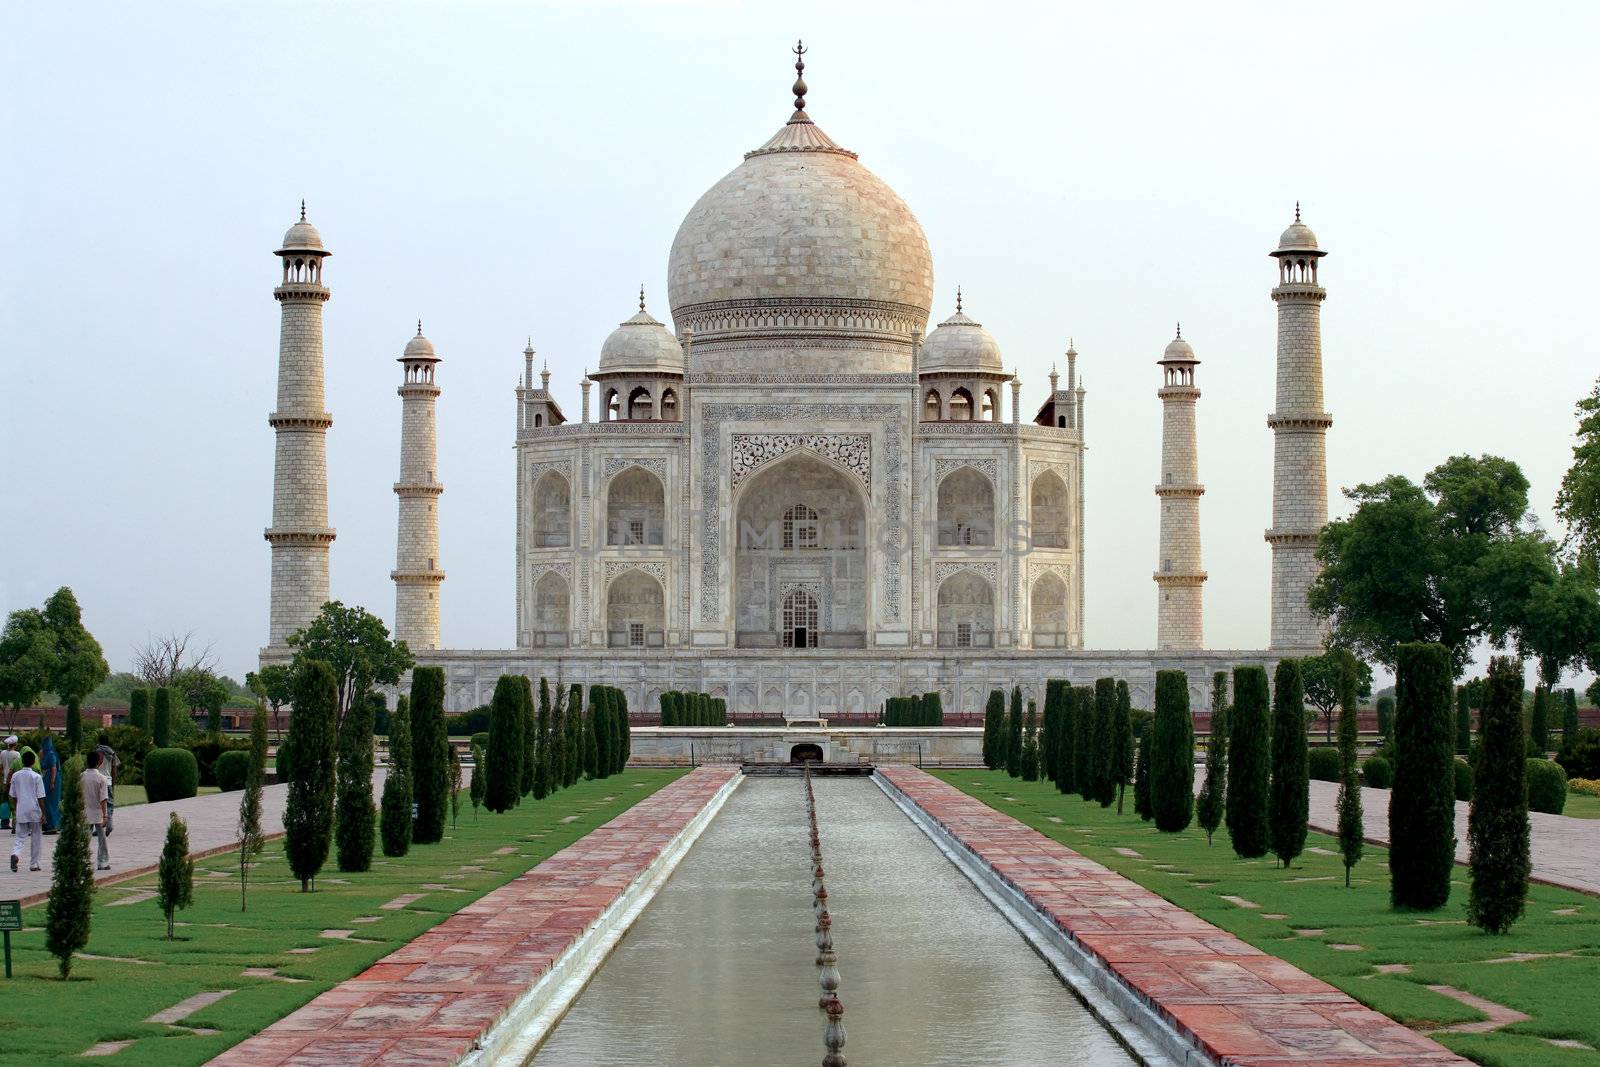 The Taj Mahal in Agra, India.
